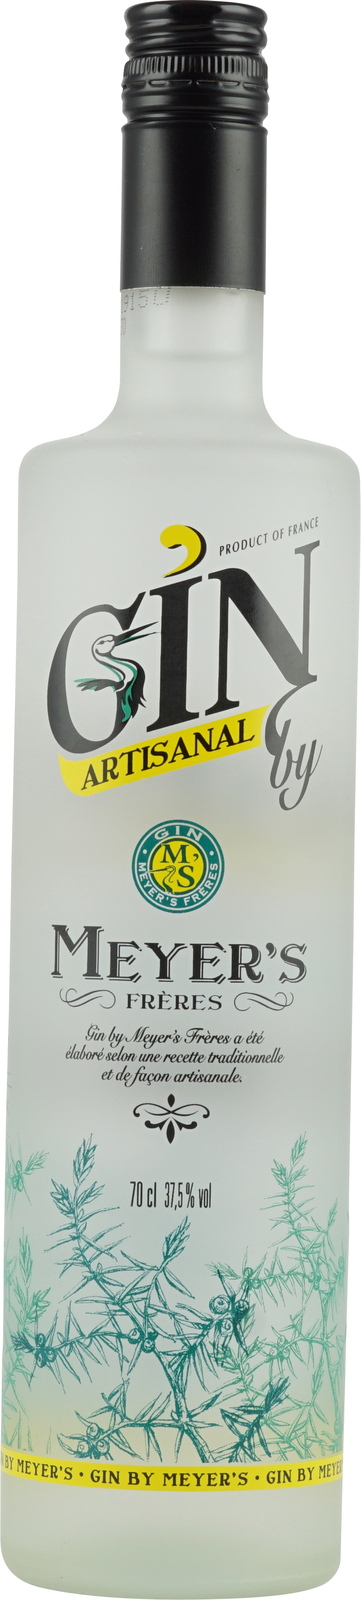 Artisanal Gin Freres bei Meyers